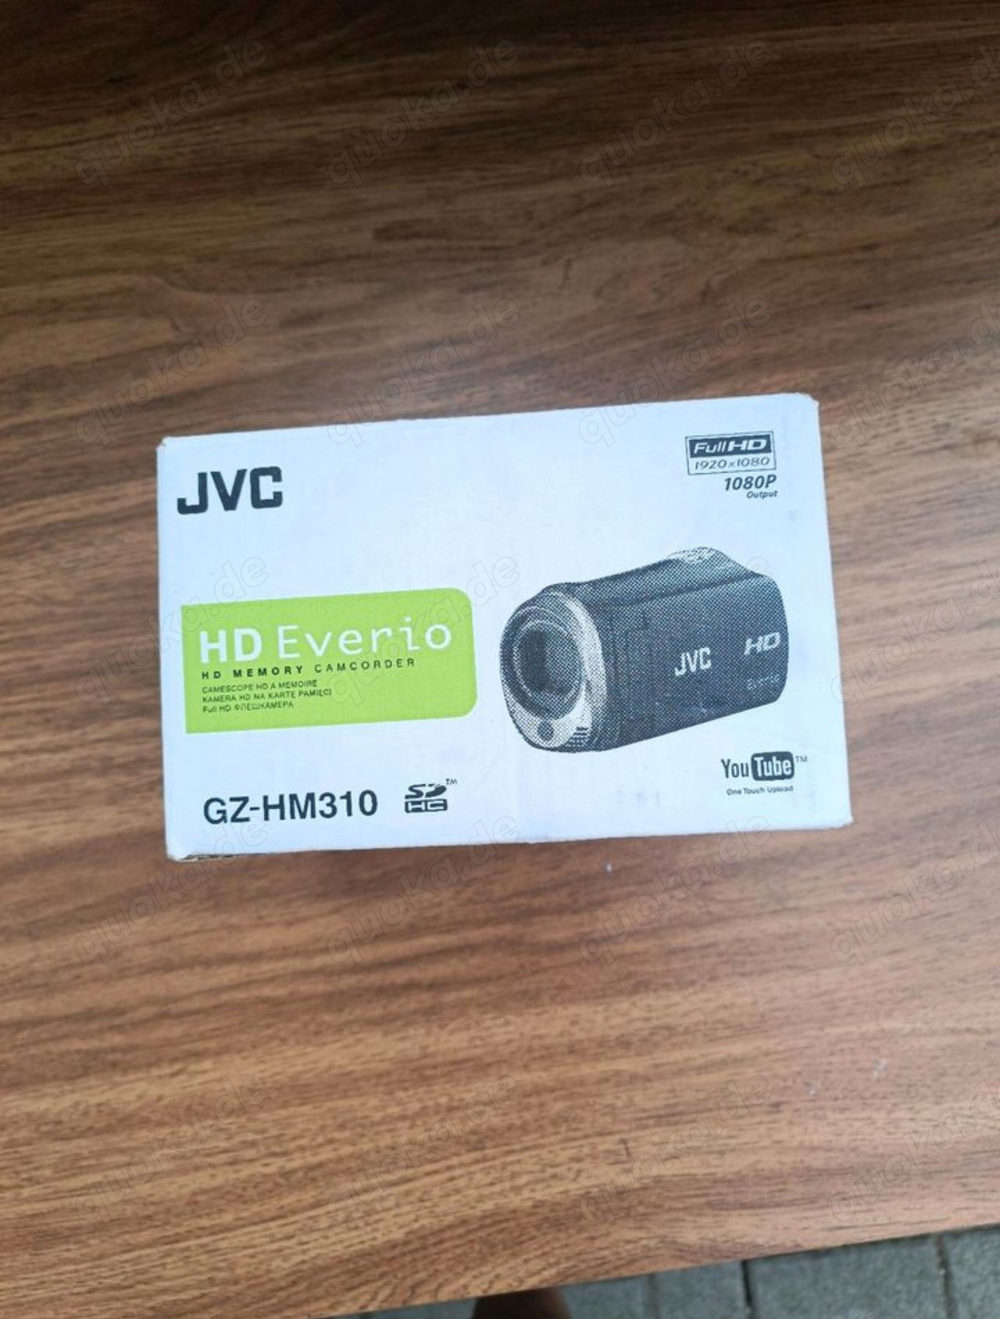 JVC Full HD Everio Camcorder GZ-HM310 HDMI 1080 P YouTube  